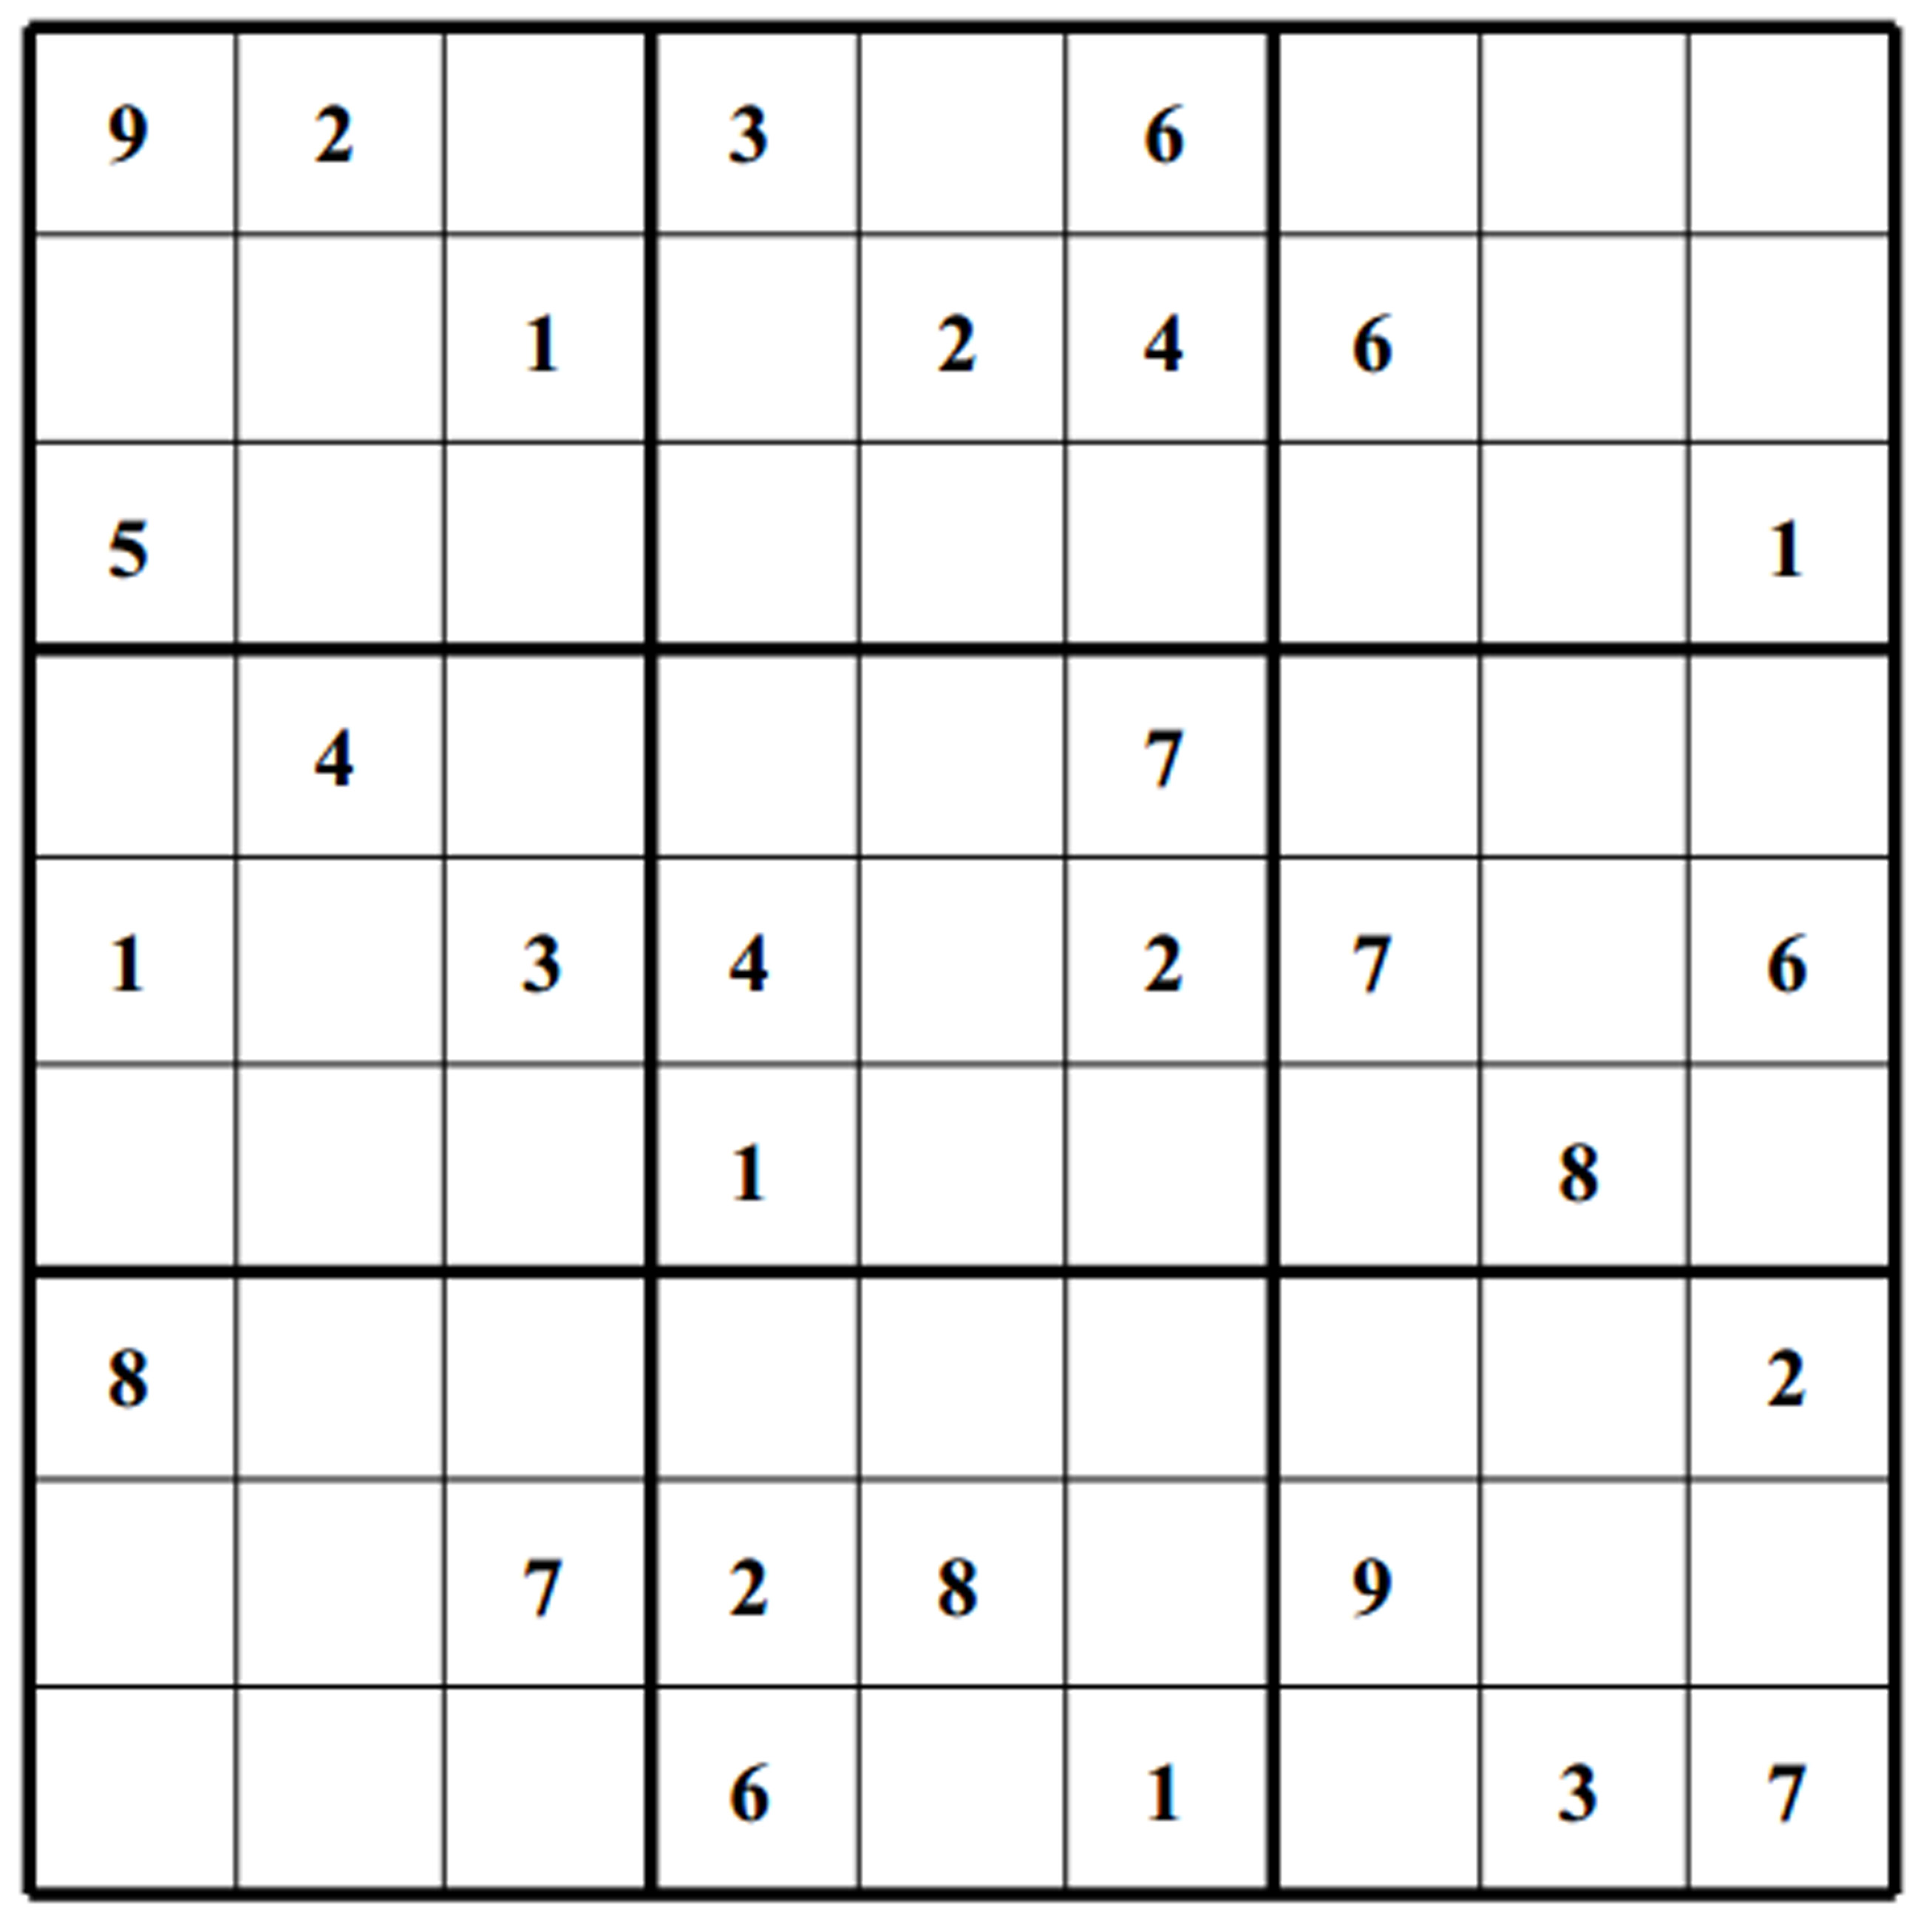 FREE SUDOKU PUZZLE HARD 012 Free Sudoku Puzzles